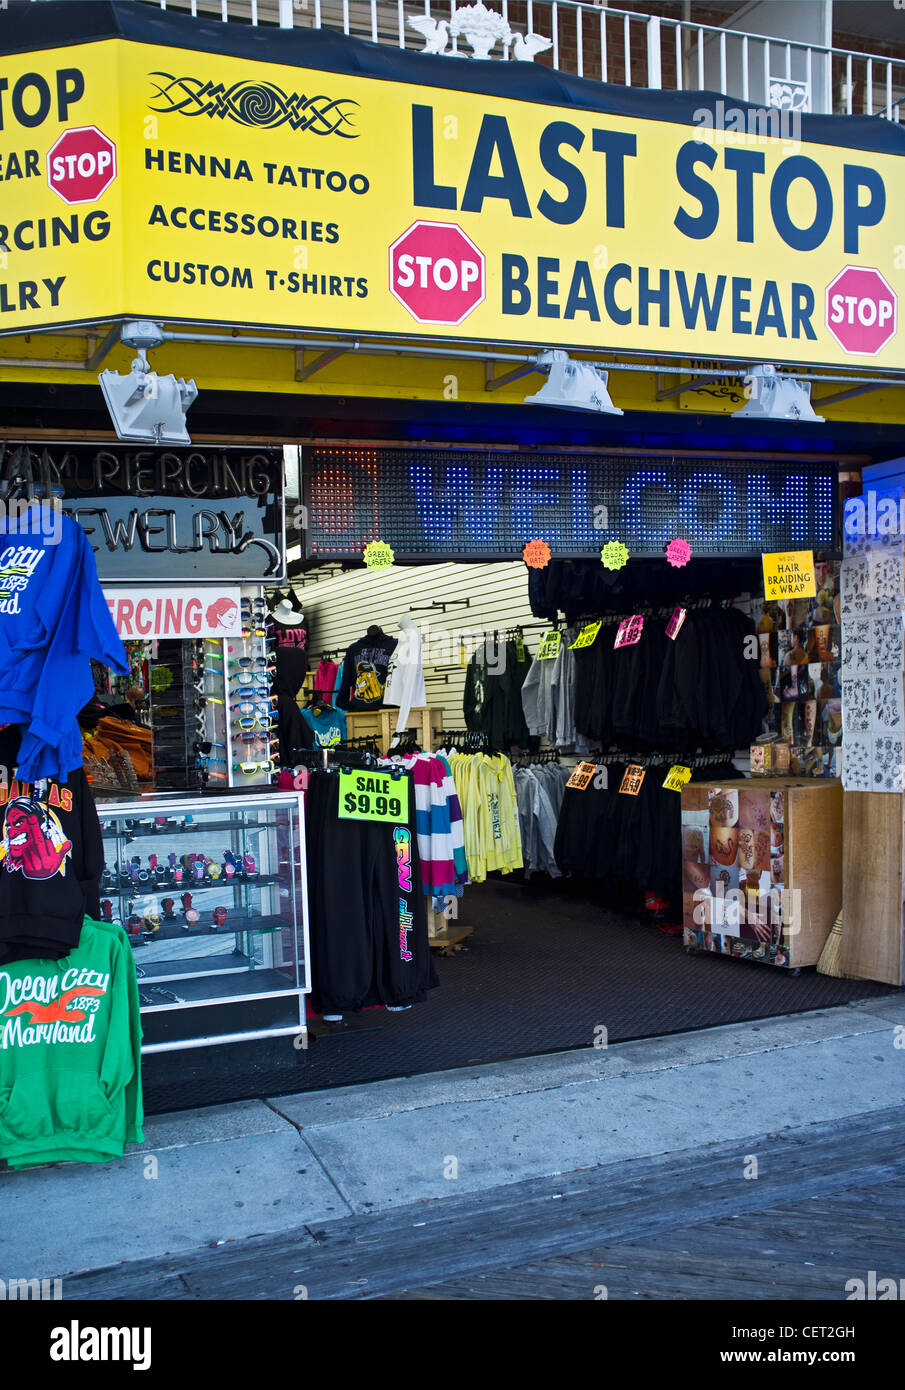 Last Stop Beachwear storefront on the boardwalk of Ocean City Maryland. Stock Photo